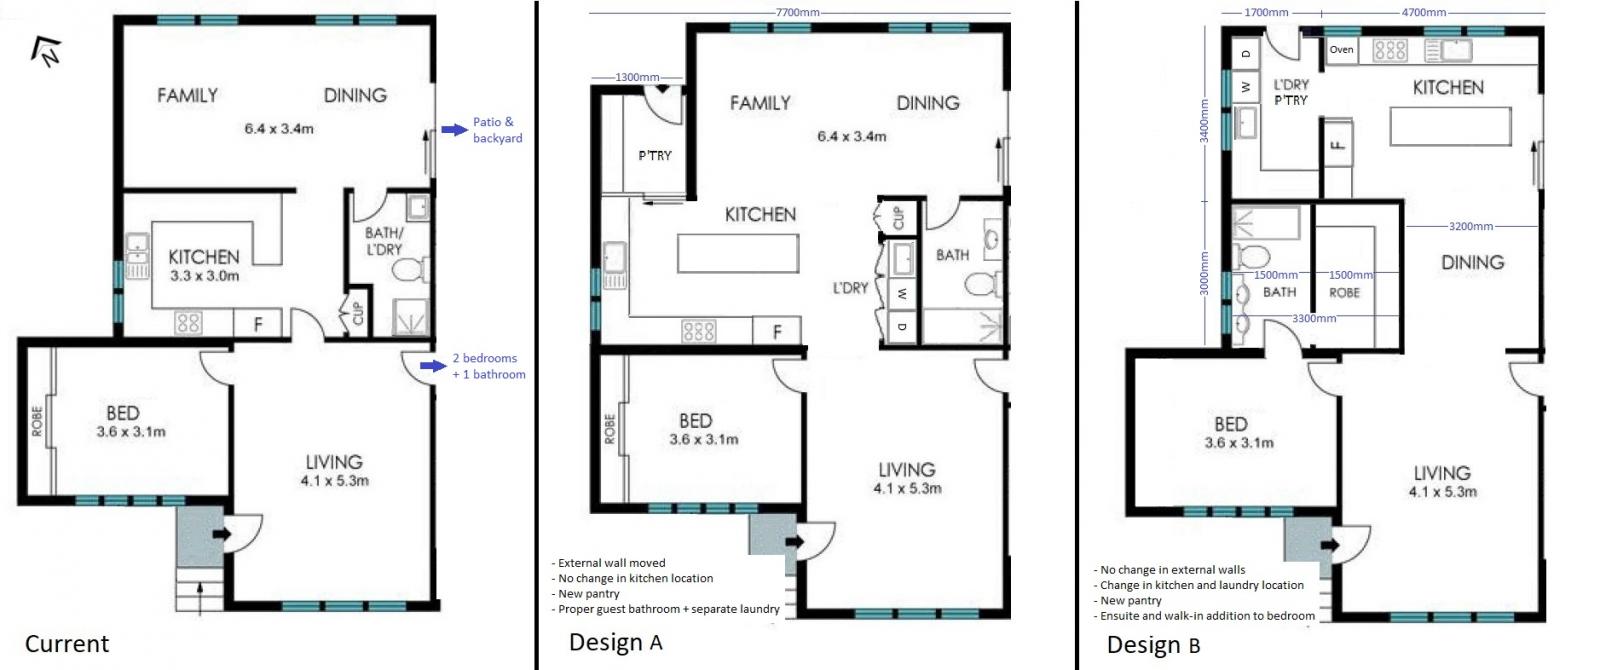 Home Reno - Questions + Floorplan Changes?